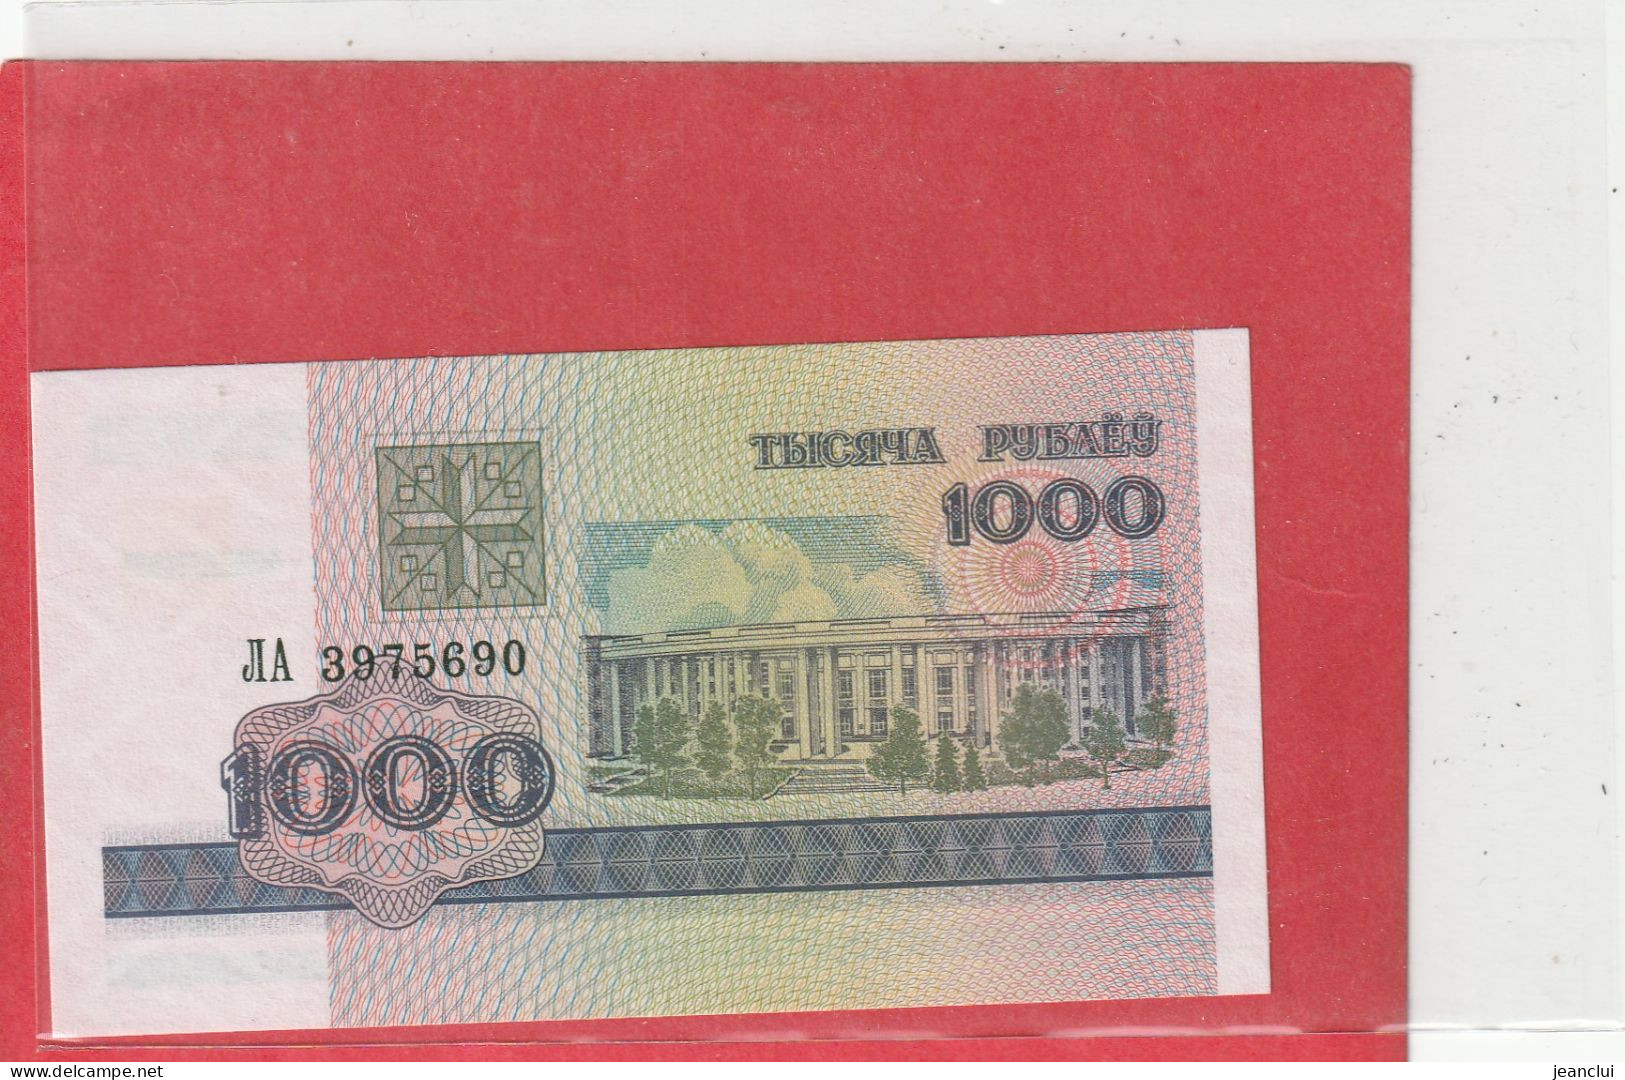 BELARUS NATIONAL BANK  .  1.000 RUBLEI   . N° 3975690 .  1998     2 SCANNES  .  BILLET ETAT LUXE - Wit-Rusland